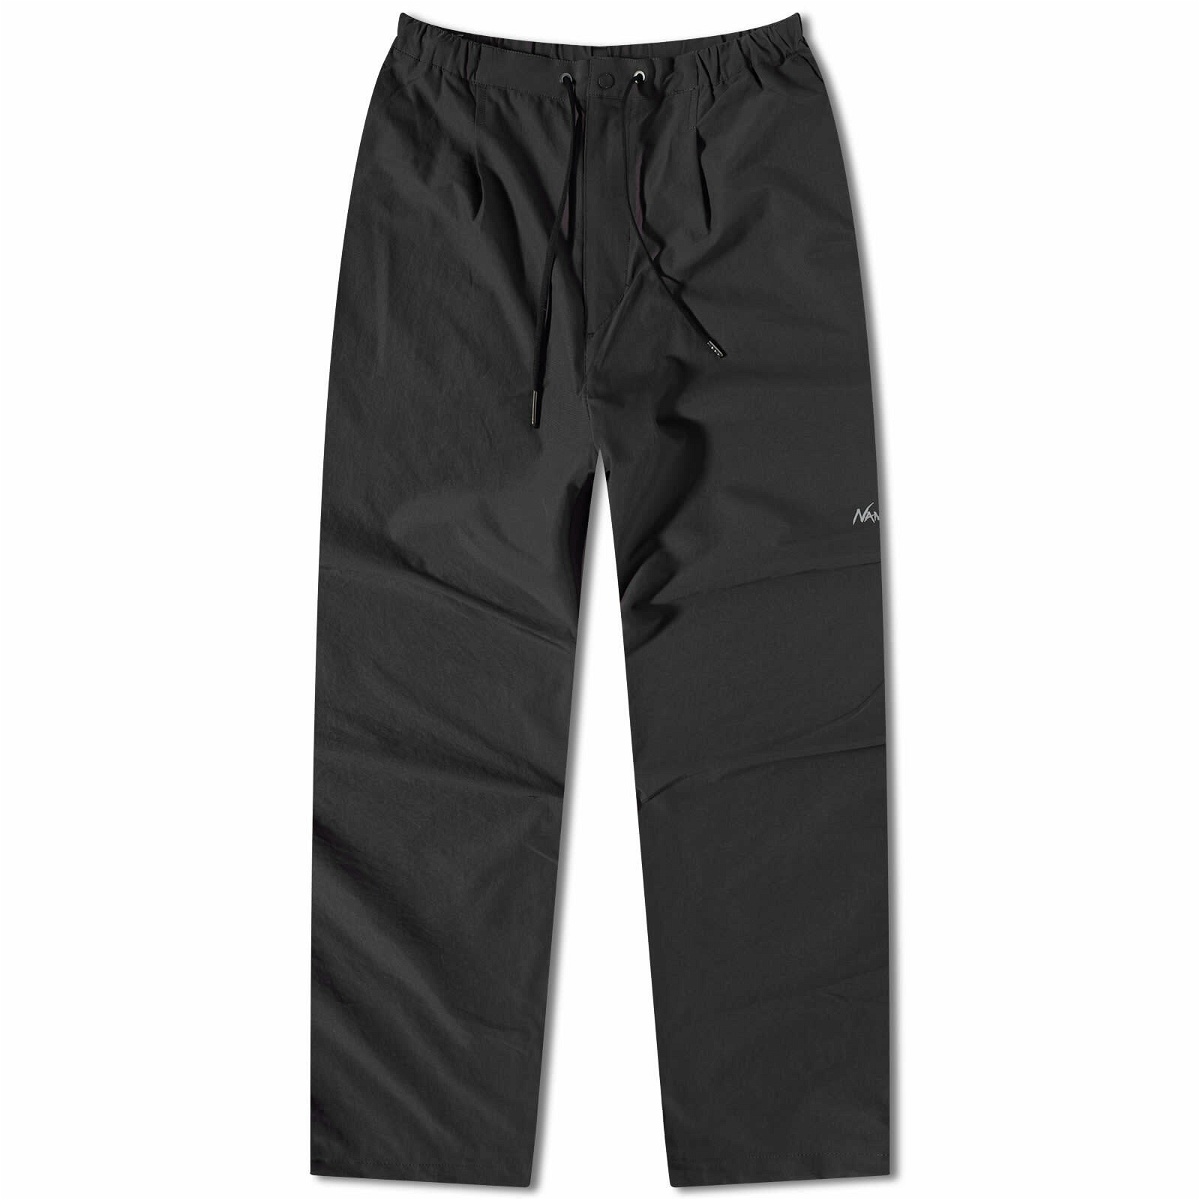 Nanga Men's Air Cloth Comfy Pants in Black Nanga